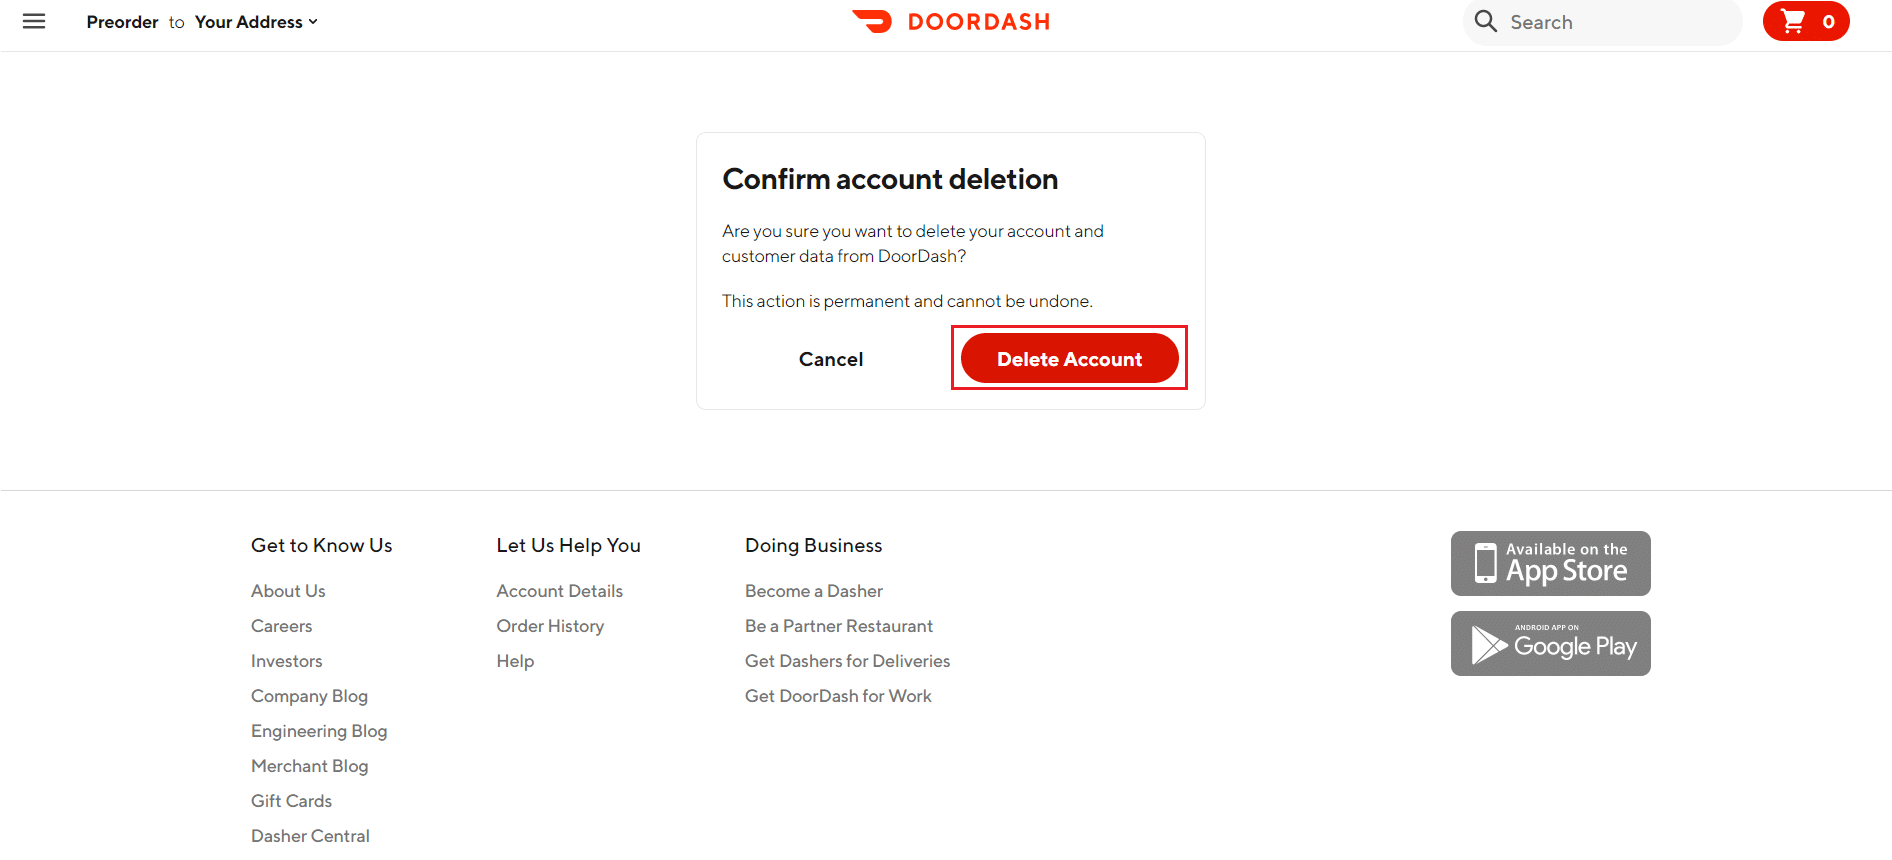 click on delete account to confirm account deletion in DoorDash website